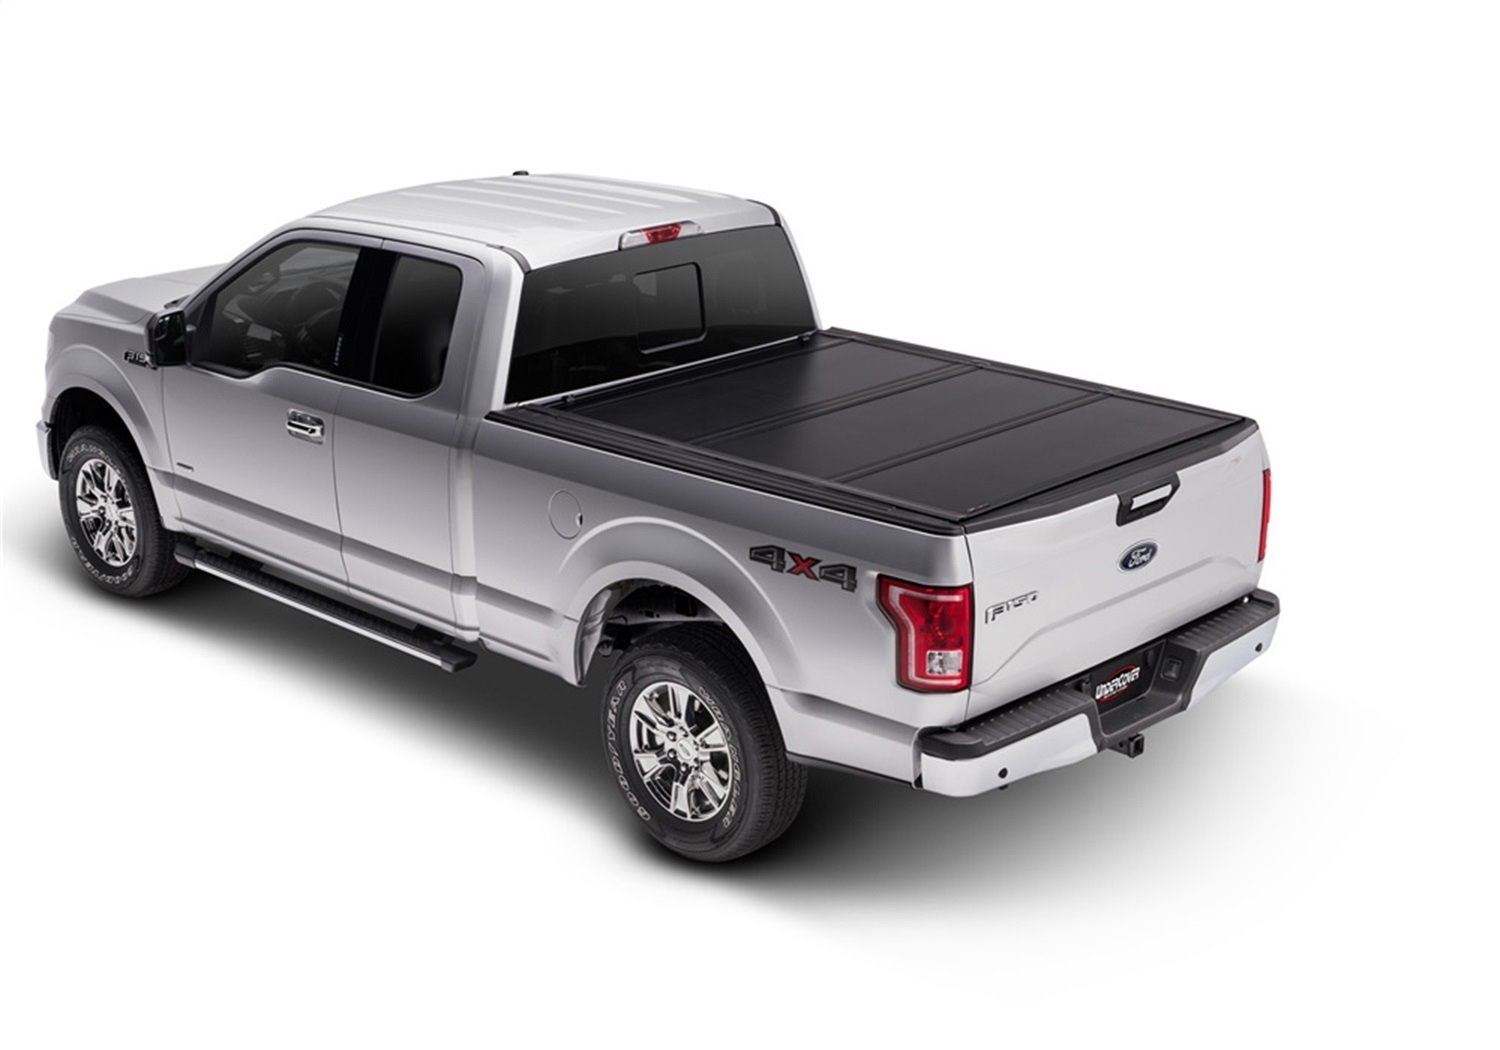 UX22023 Ultra Flex Hard Folding Cover, Fits Select Ford Ranger 6'Bed, Matte Black Finish